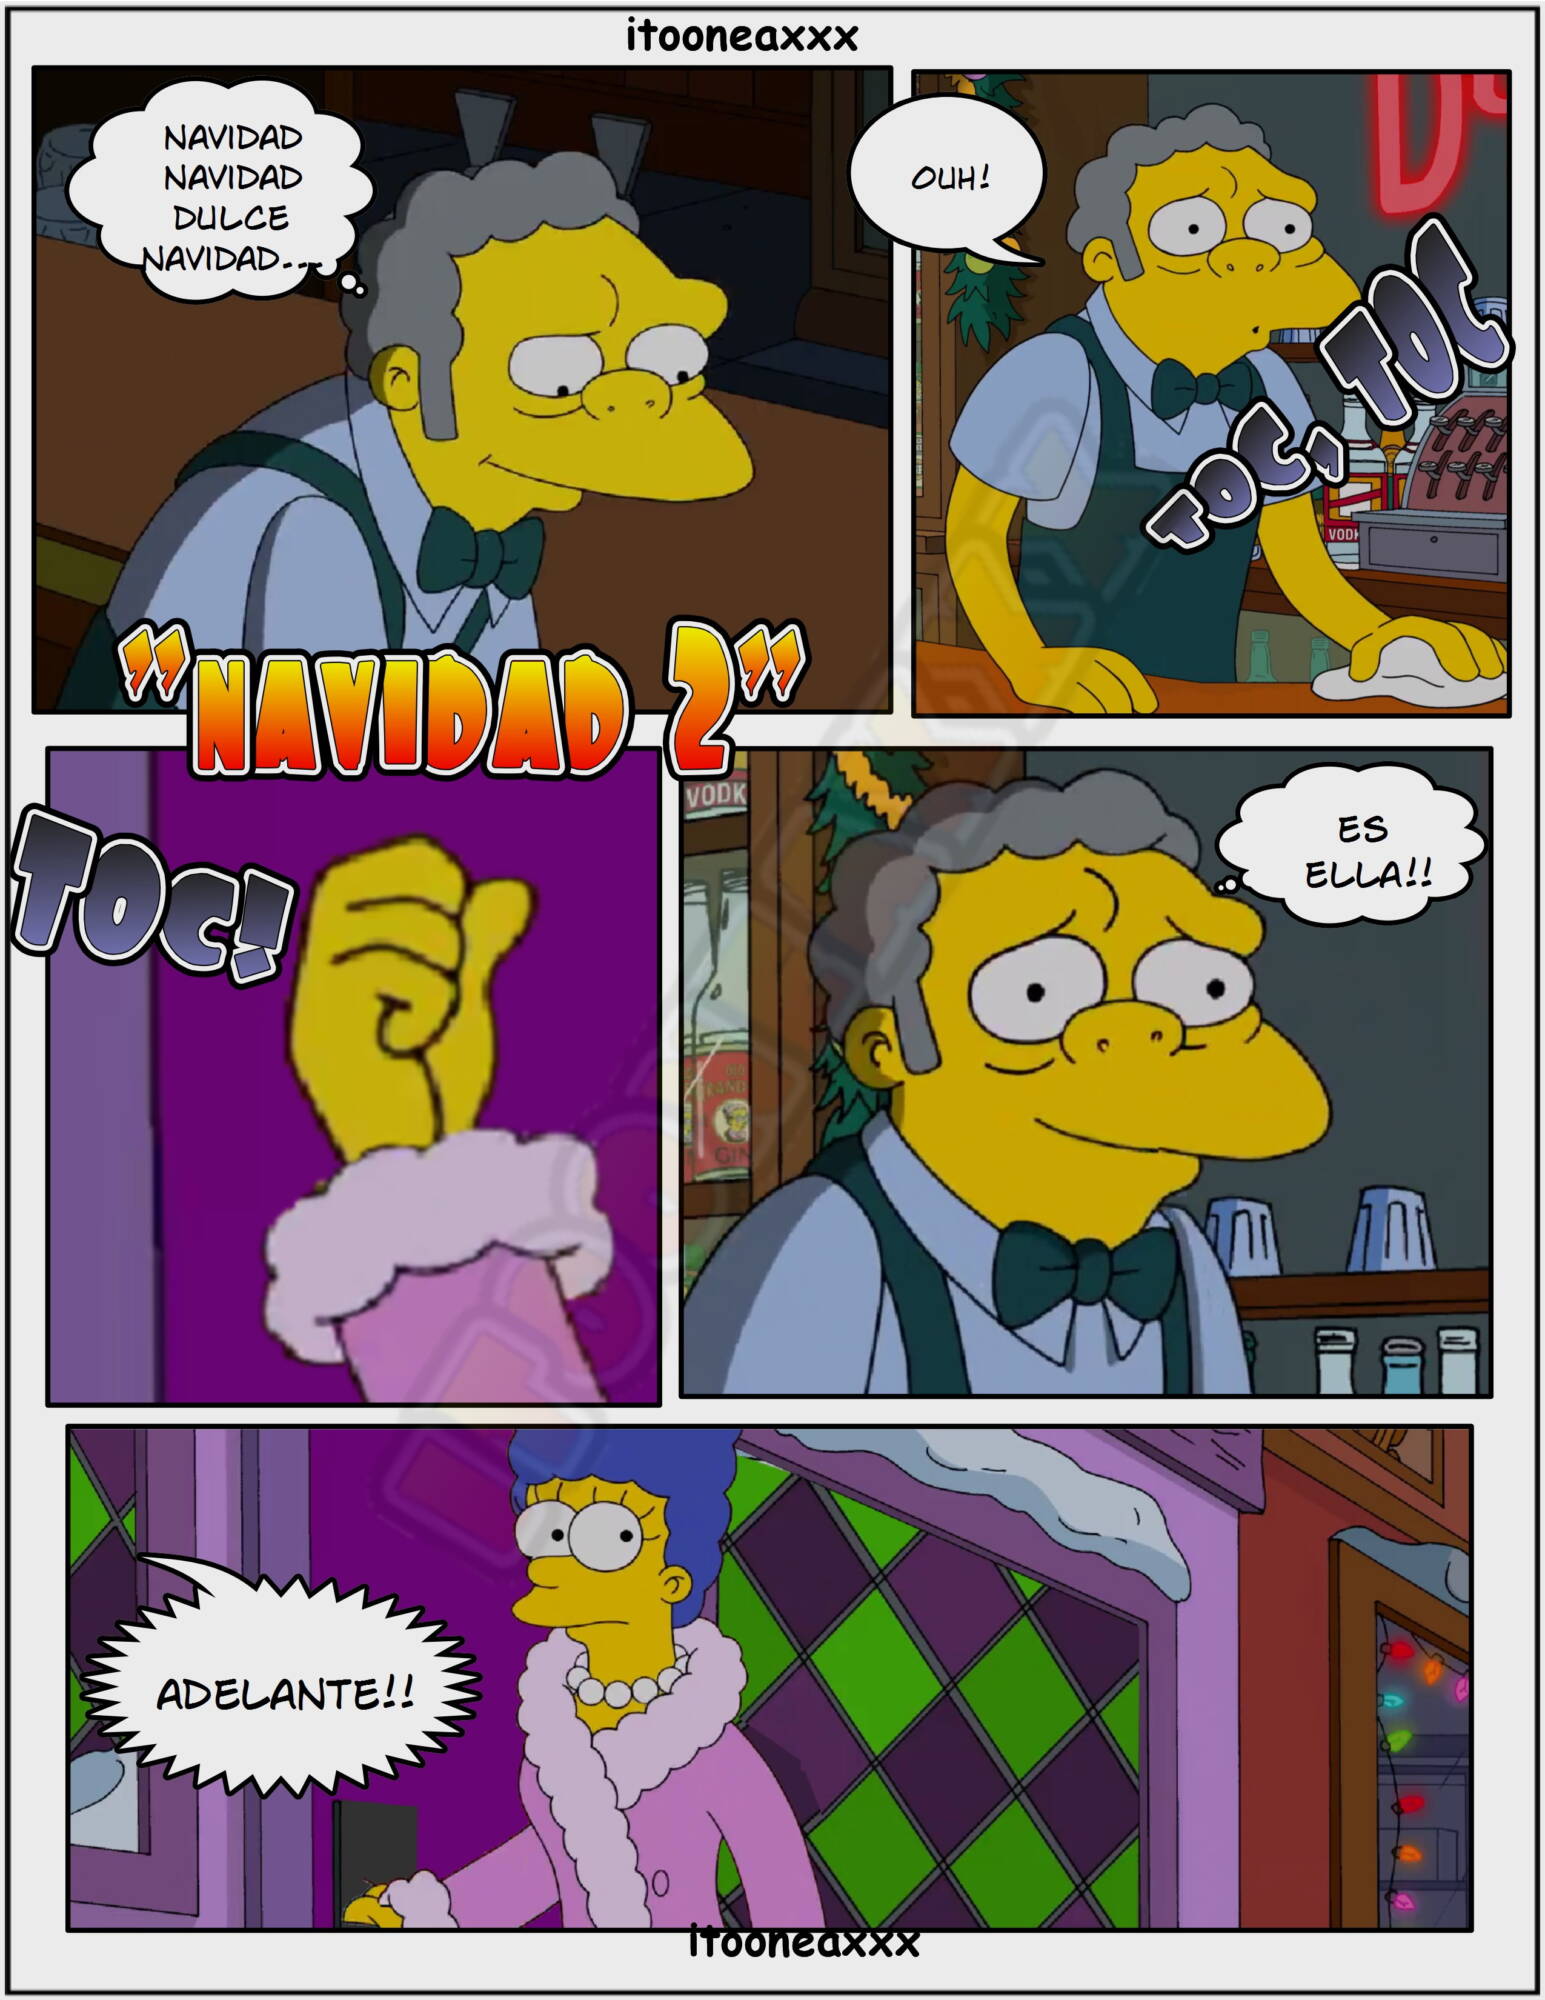 Sexy Xmas Cartoons - Simpsons Comics [IToonEAXXX] - 5.2 [Spanish] Sexy Christmas 2 - AllPornComic